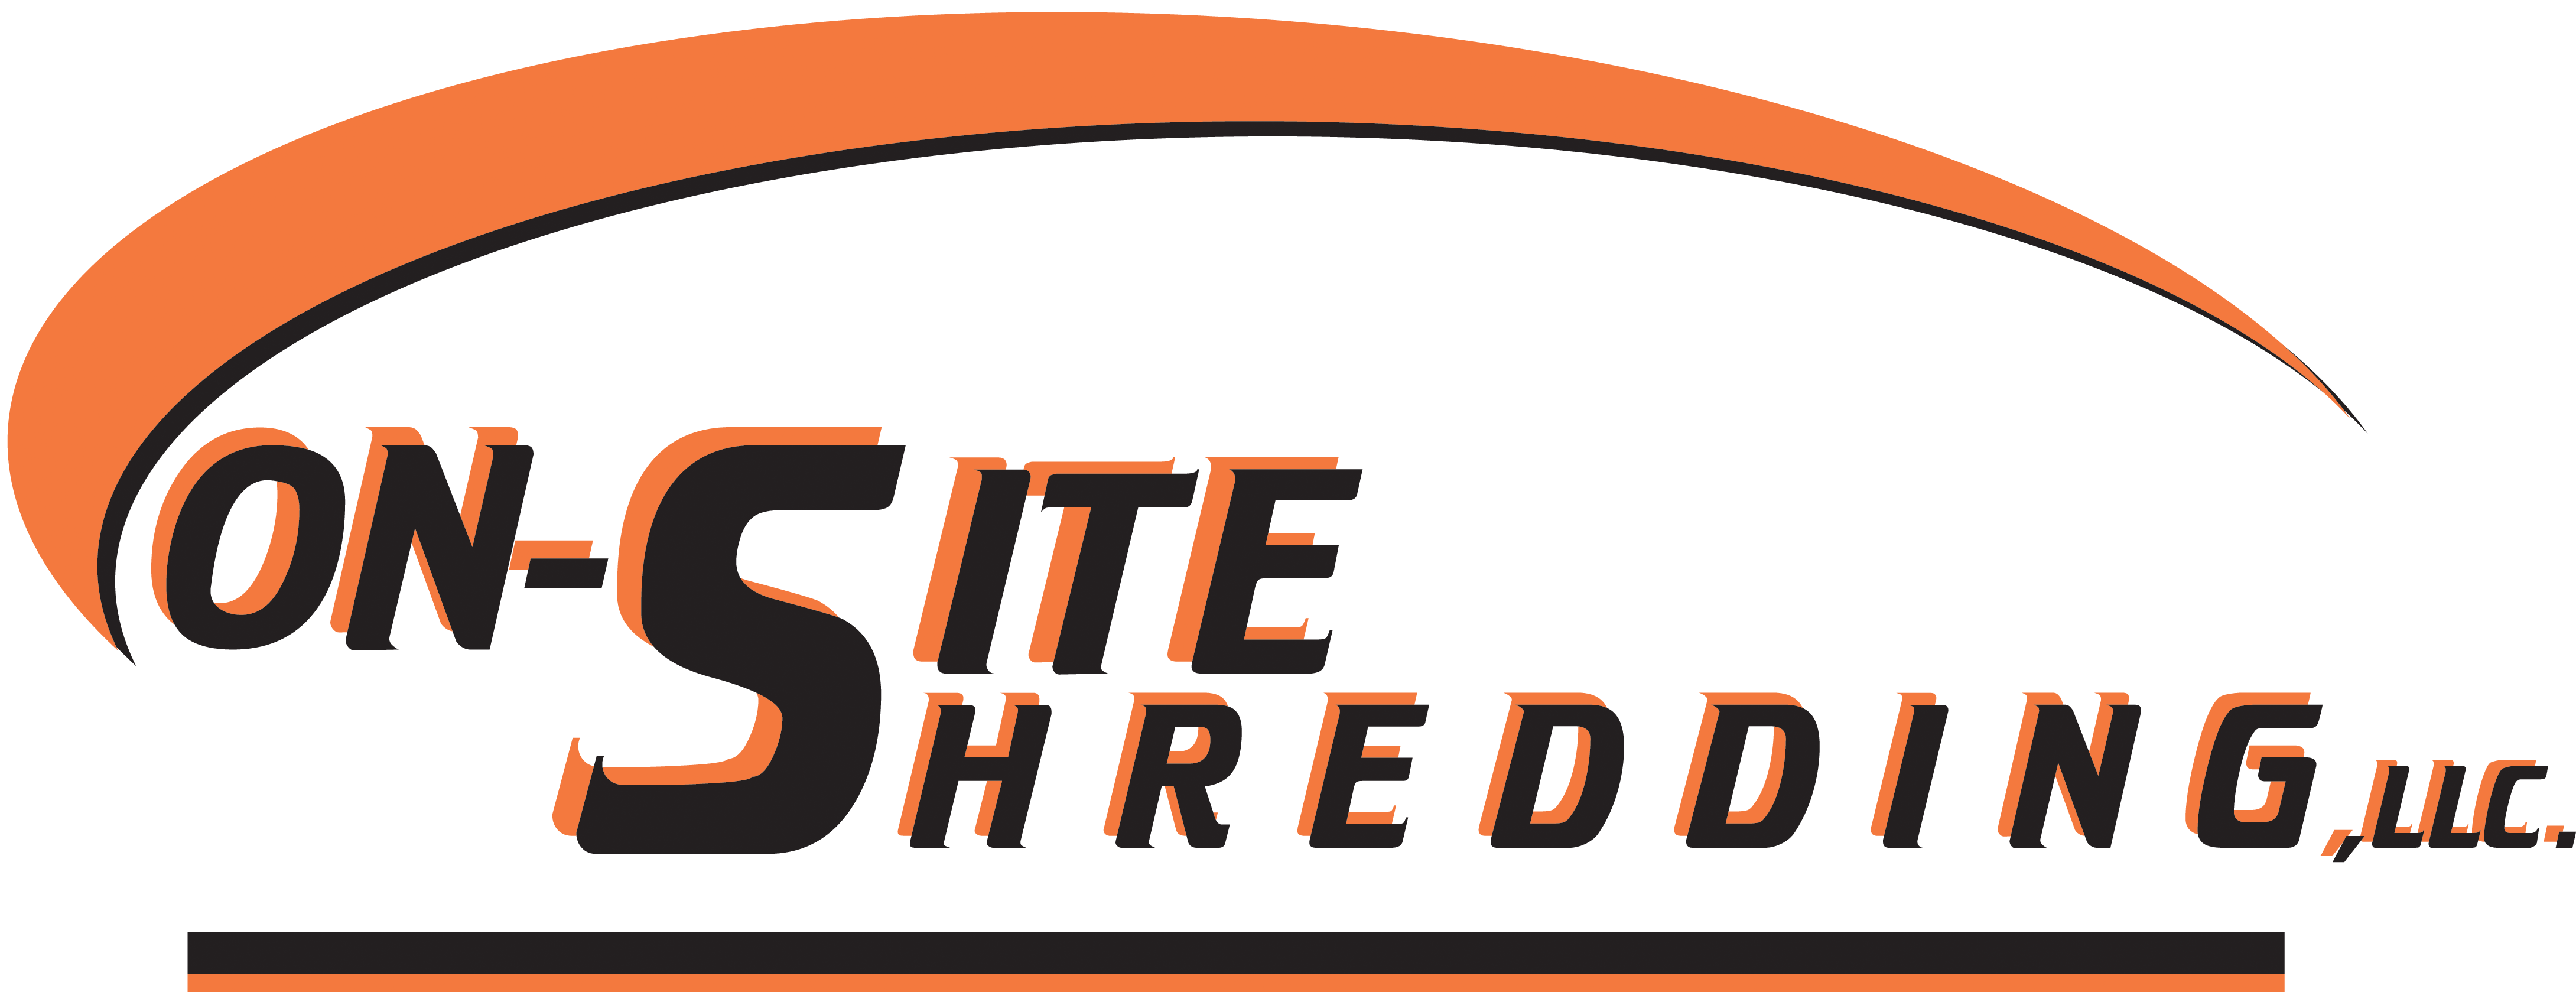 On Site Shredding Logo on a Transparent Background